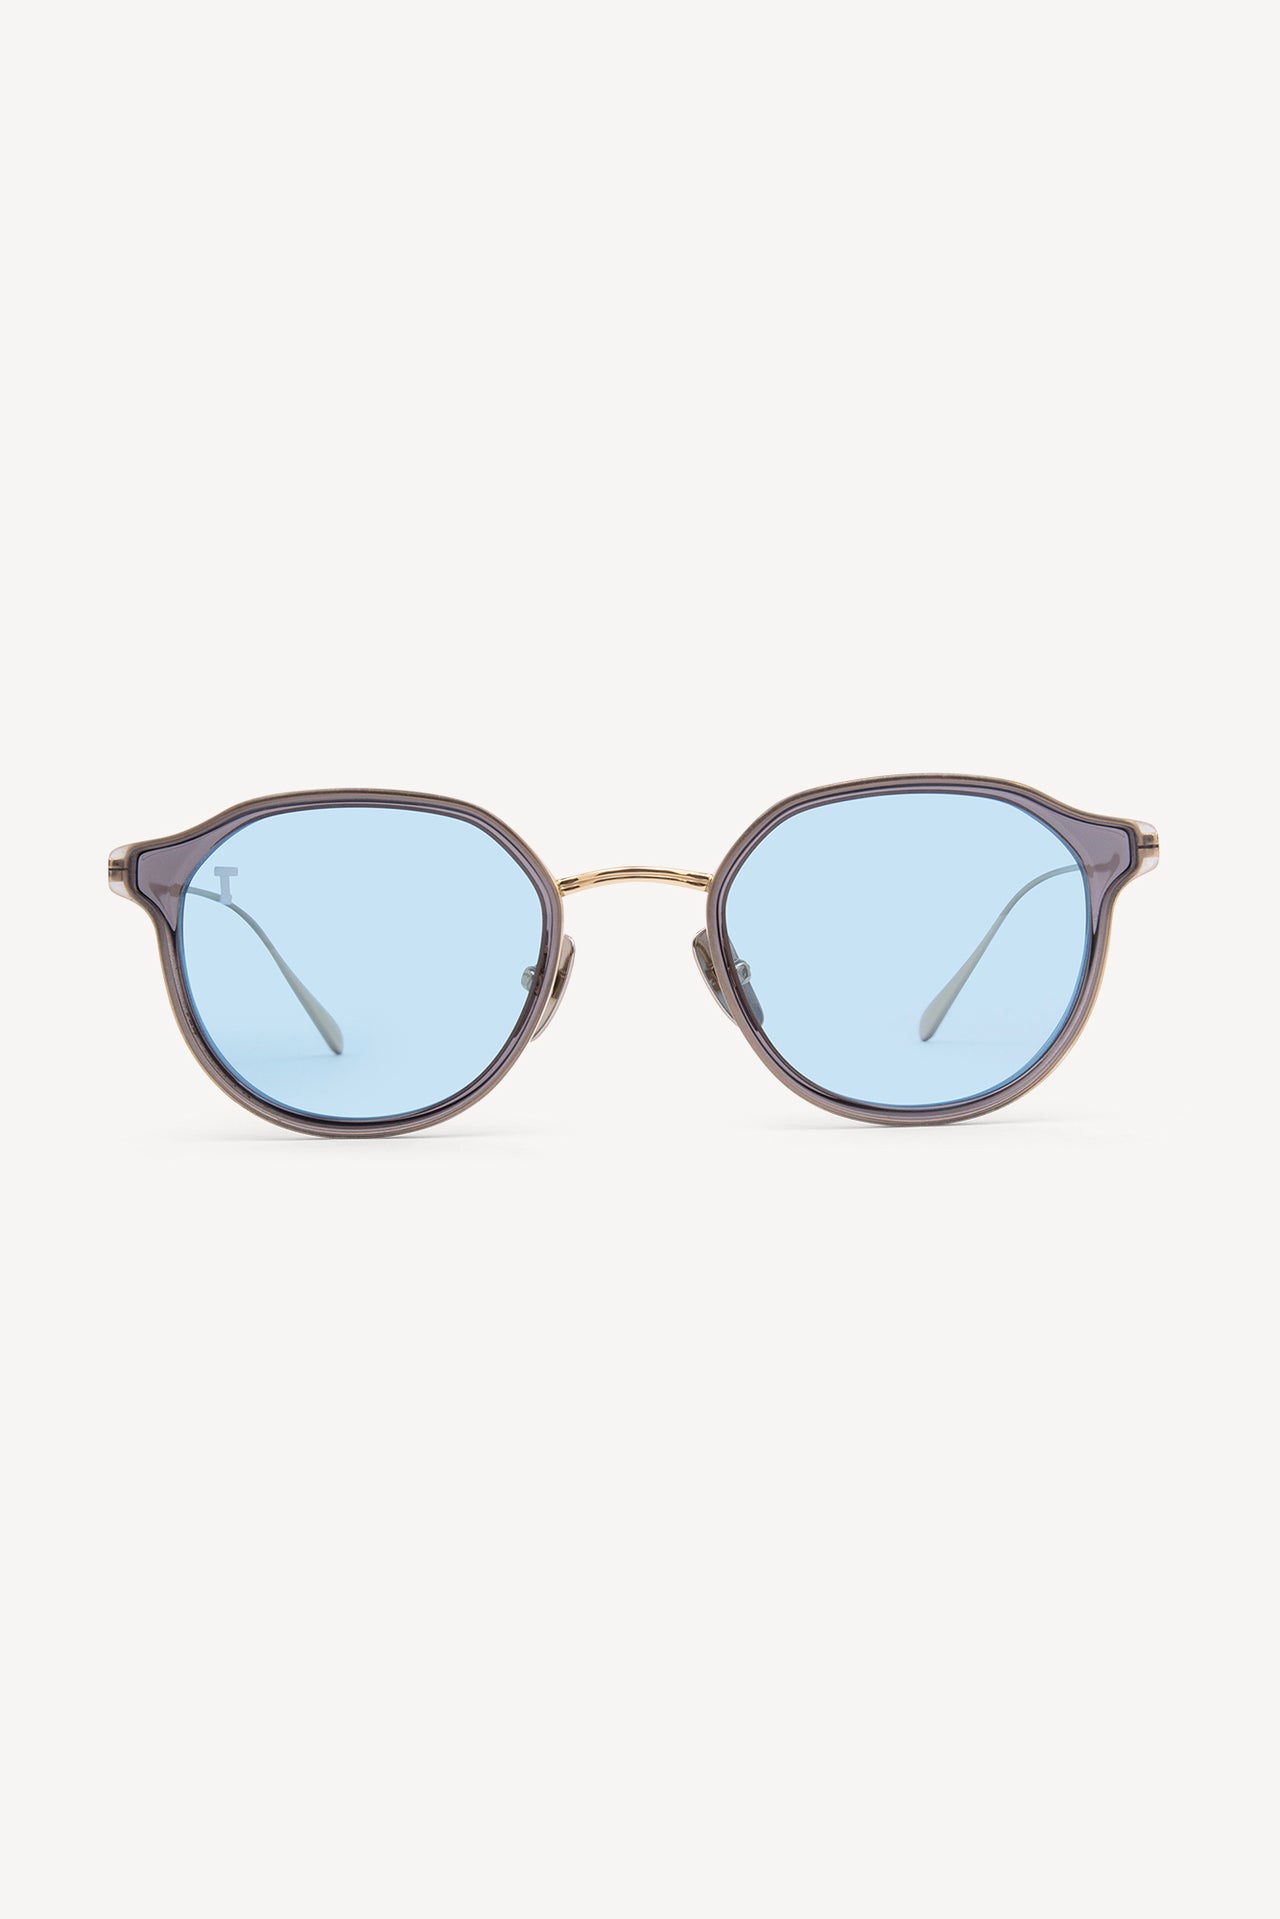 TOATIE Bendigo Round Sunglasses GREY/BLUE